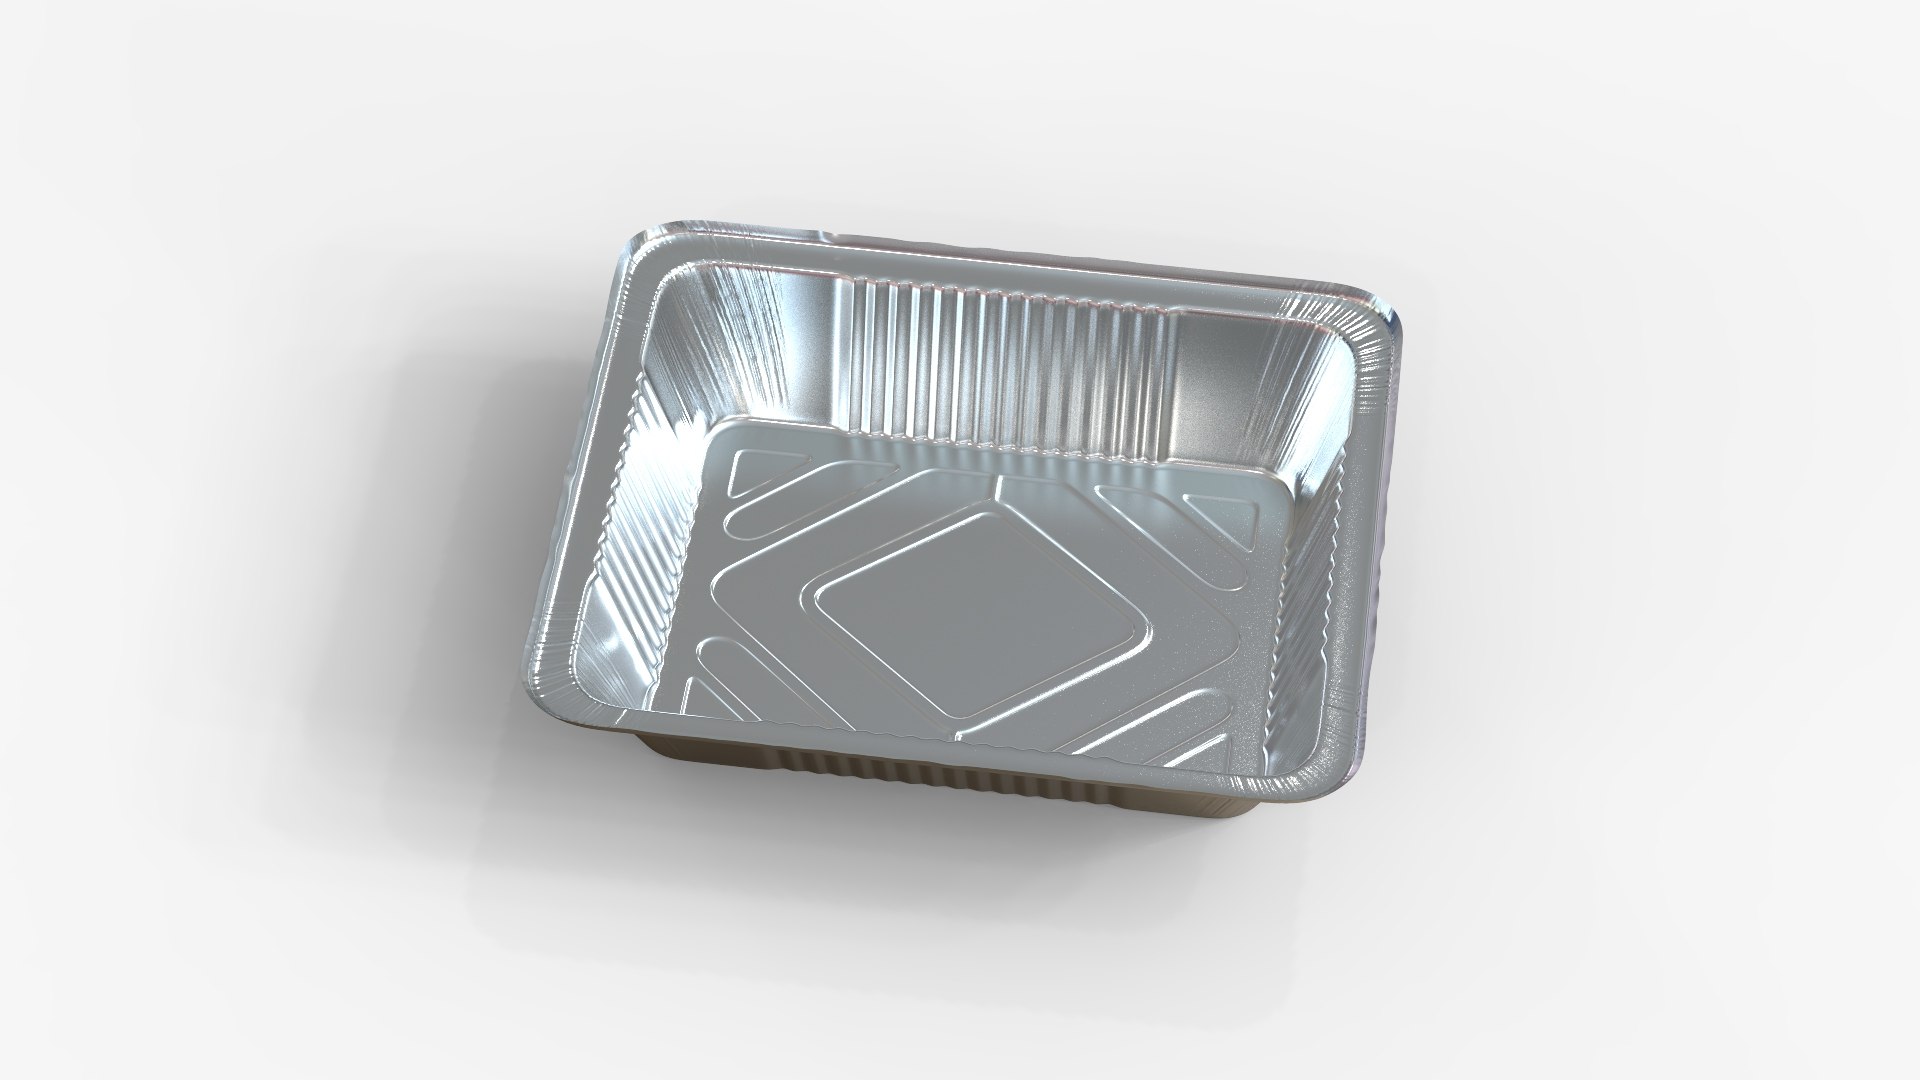 33 Aluminum Foil Food Grade Images, Stock Photos, 3D objects